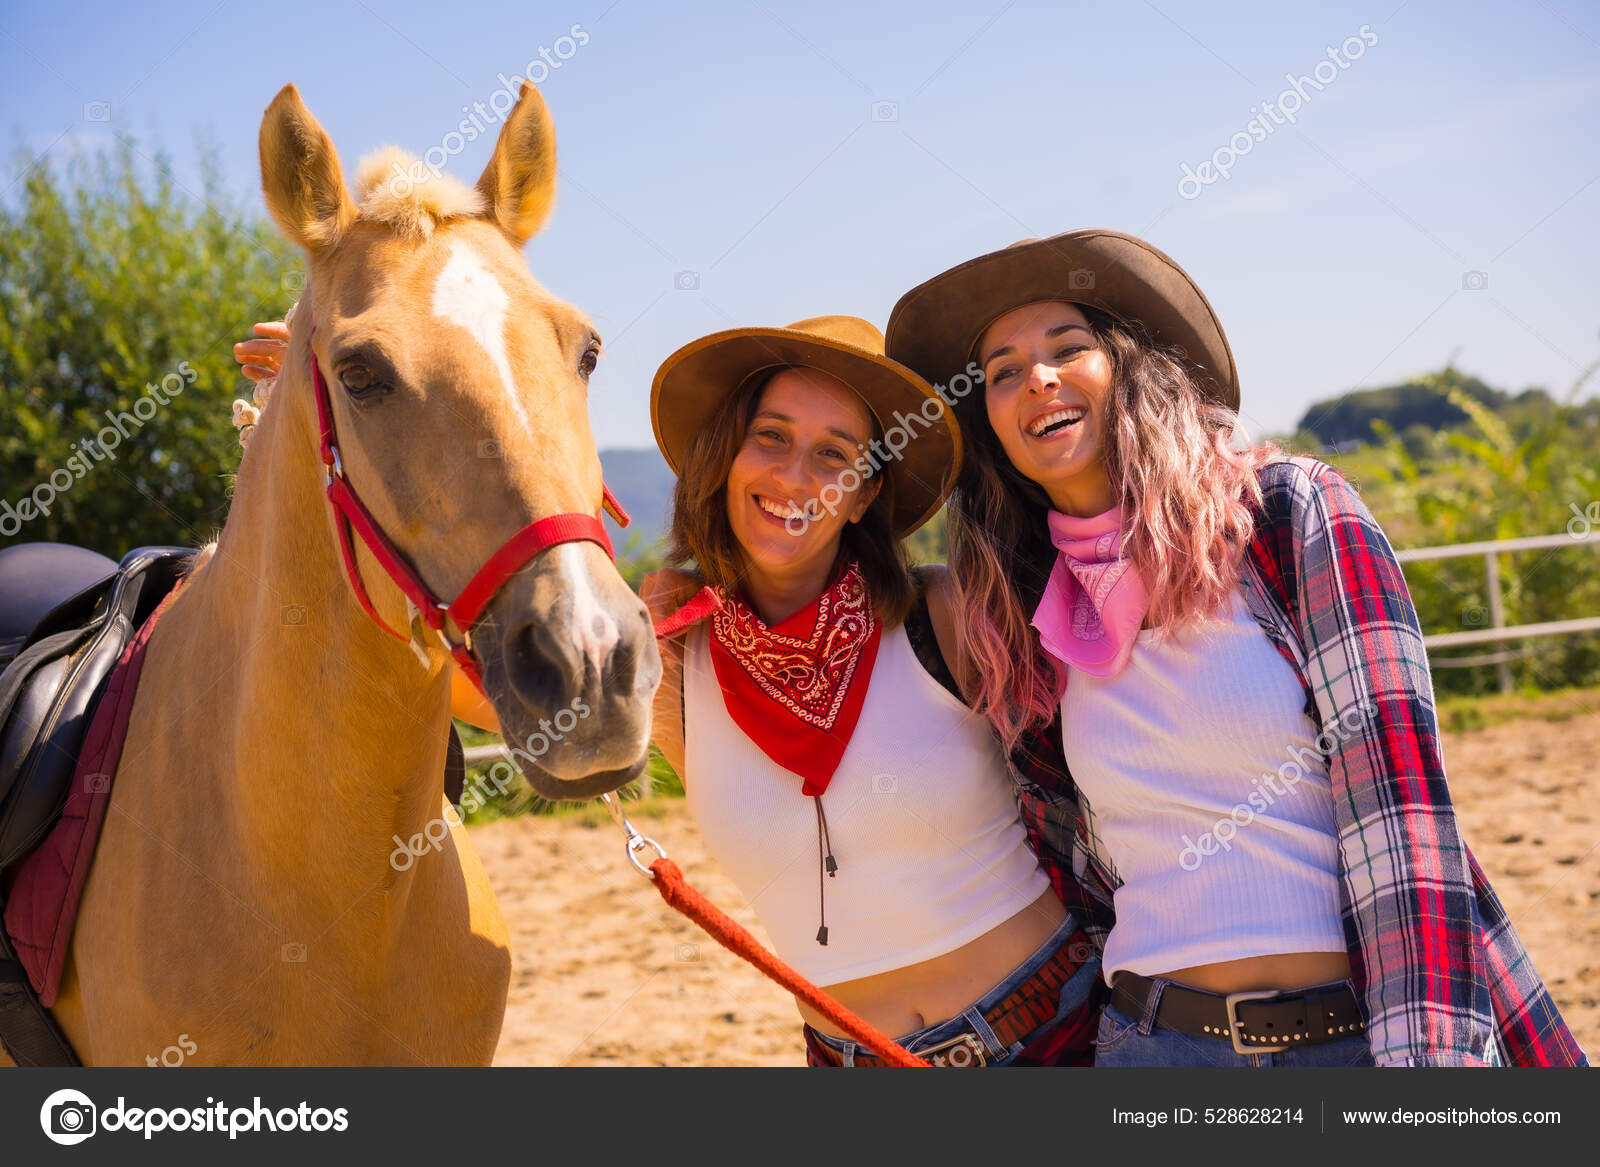 Retrato de camisa xadrez de menina com cavalo preto na fazenda de cavalos.